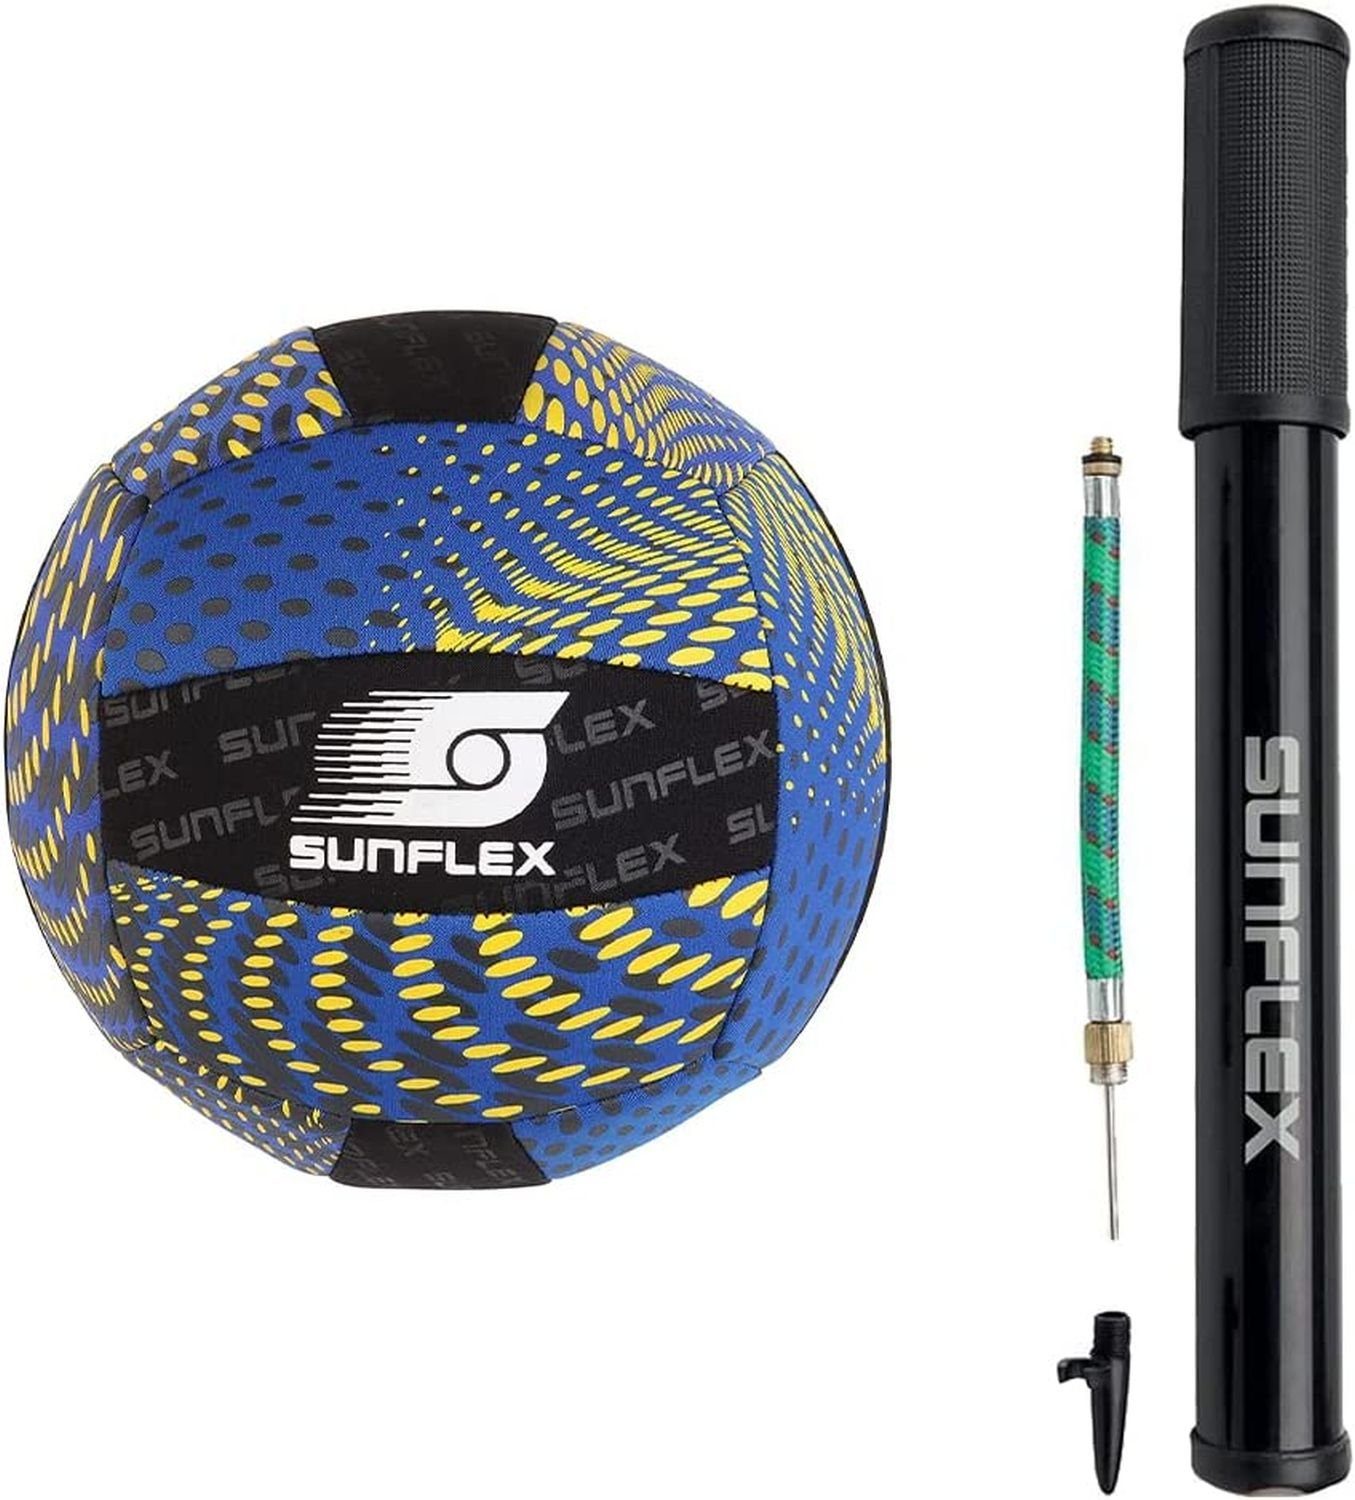 Ball 5 Größe Splash blau Beachvolleyball Pumpe inkl. Sunflex